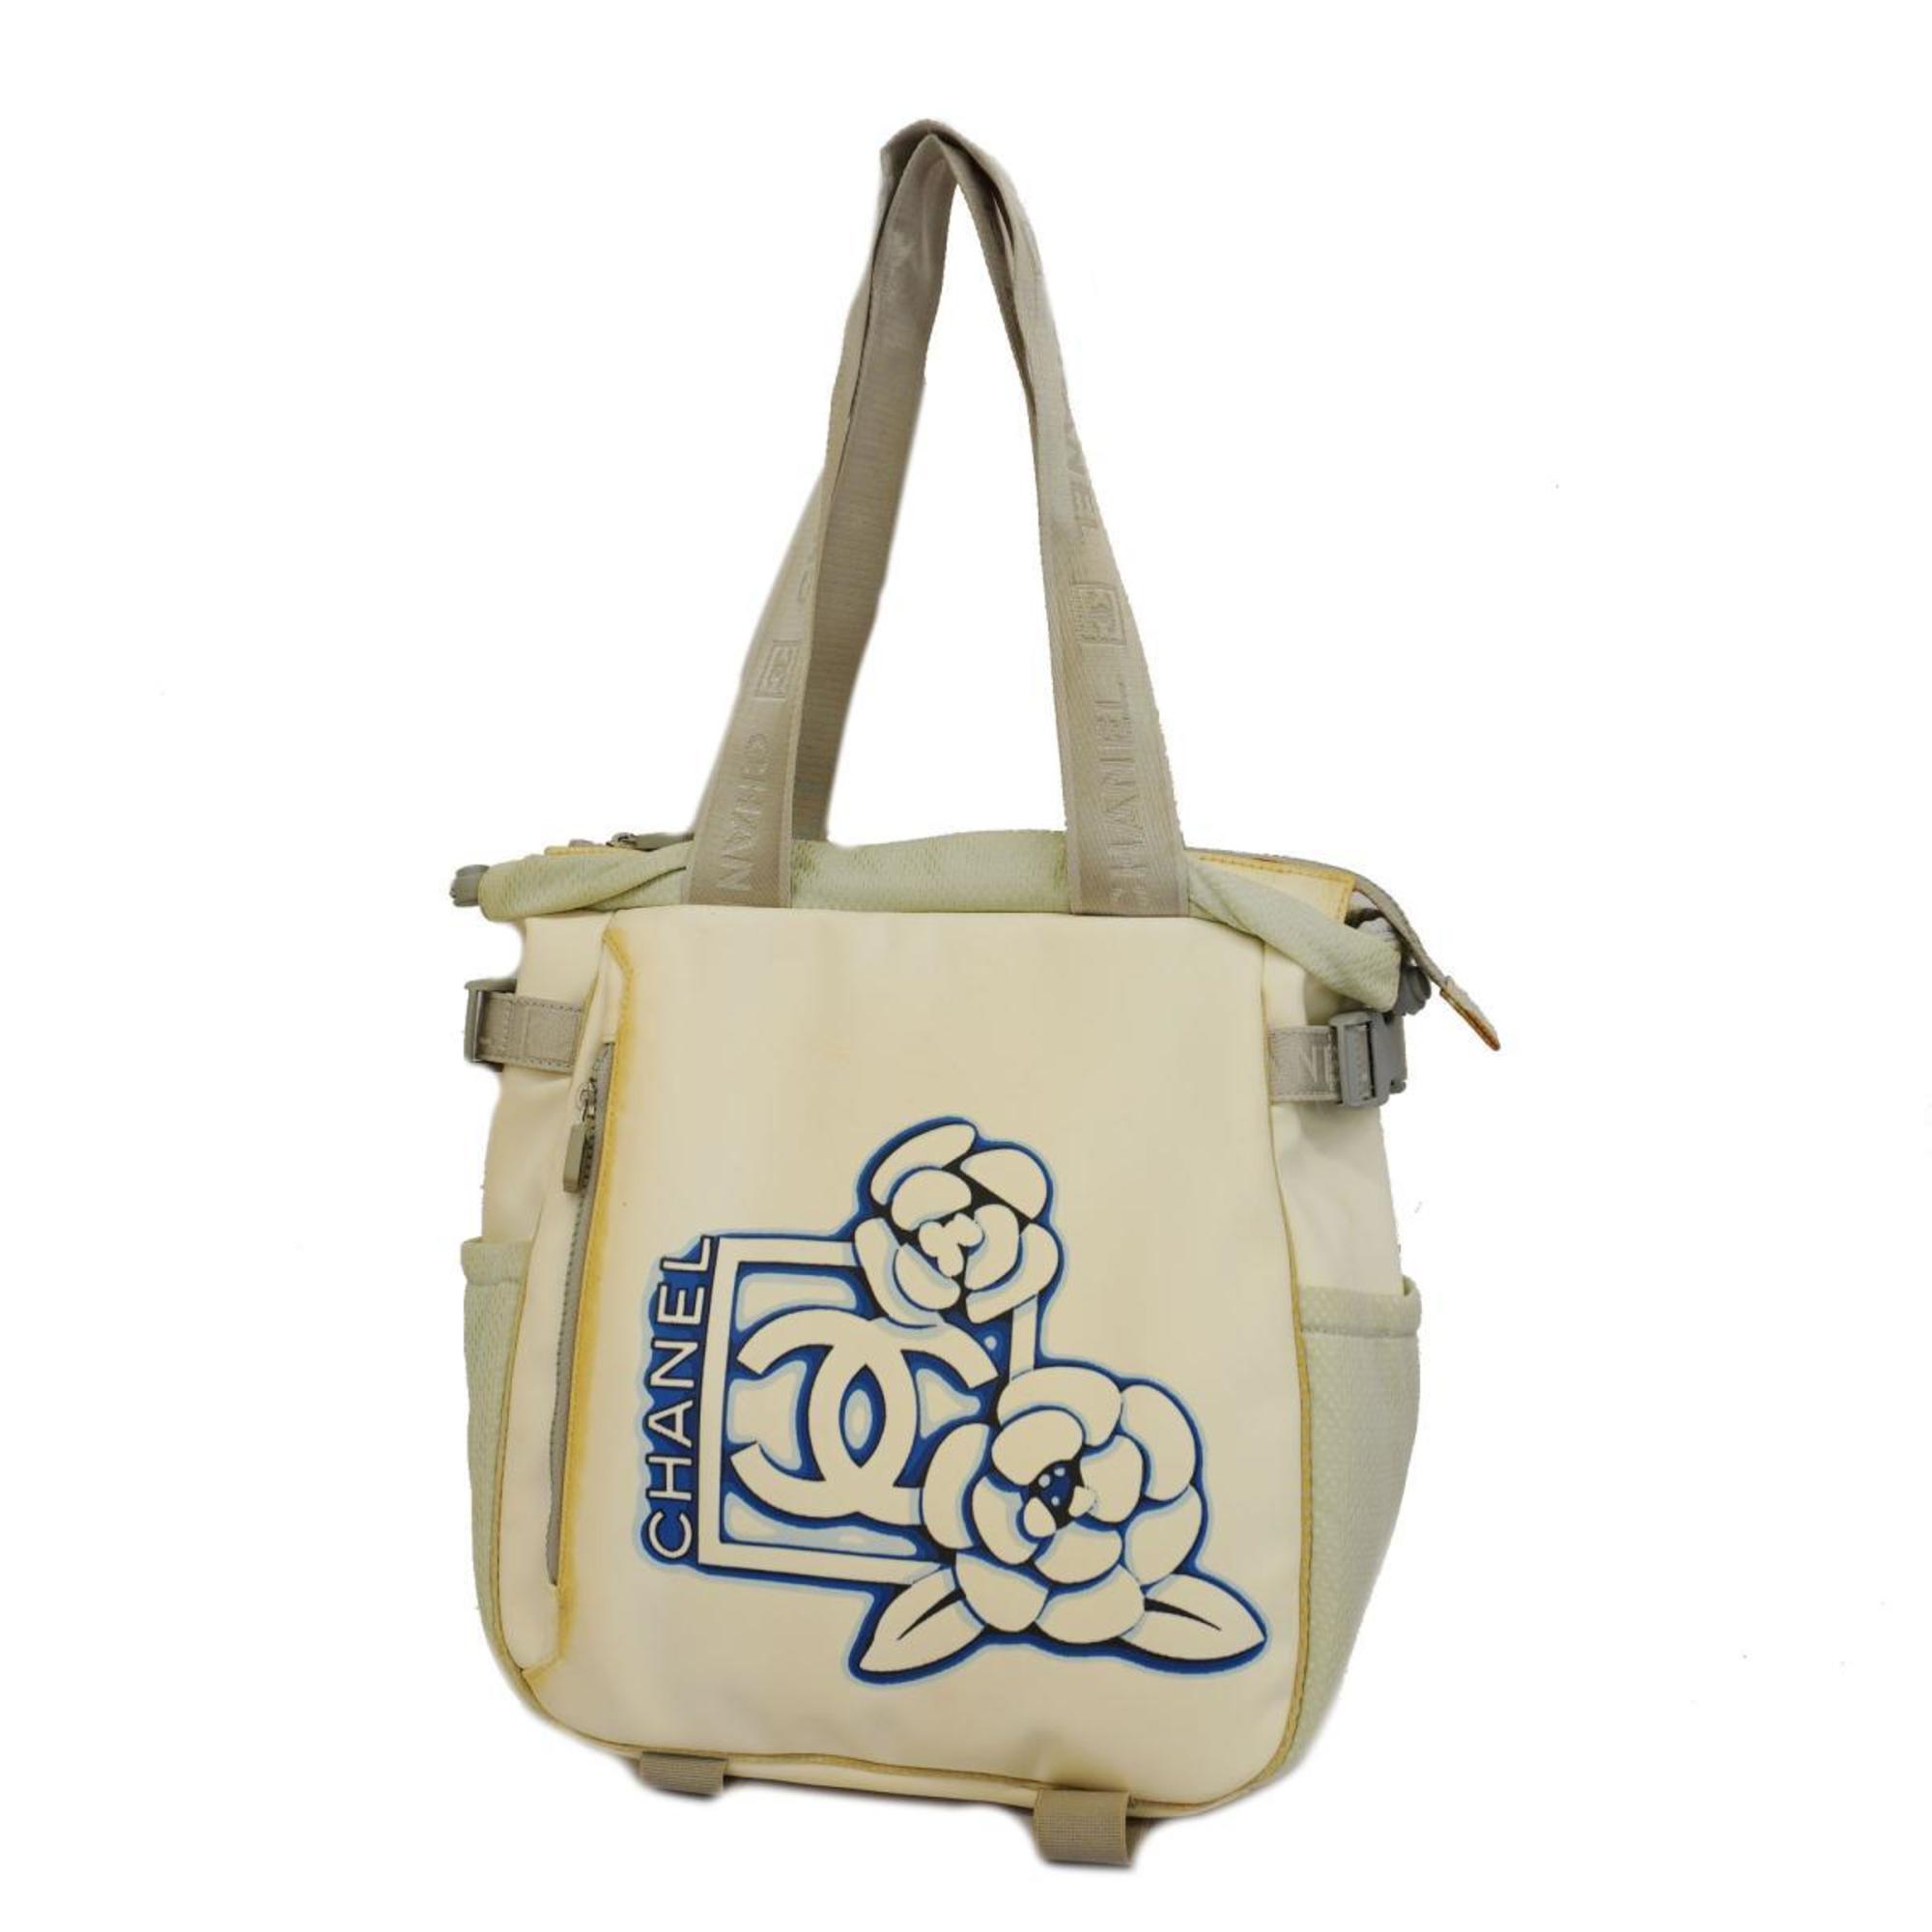 Chanel Tote Bag Sport Camellia Nylon White Women's